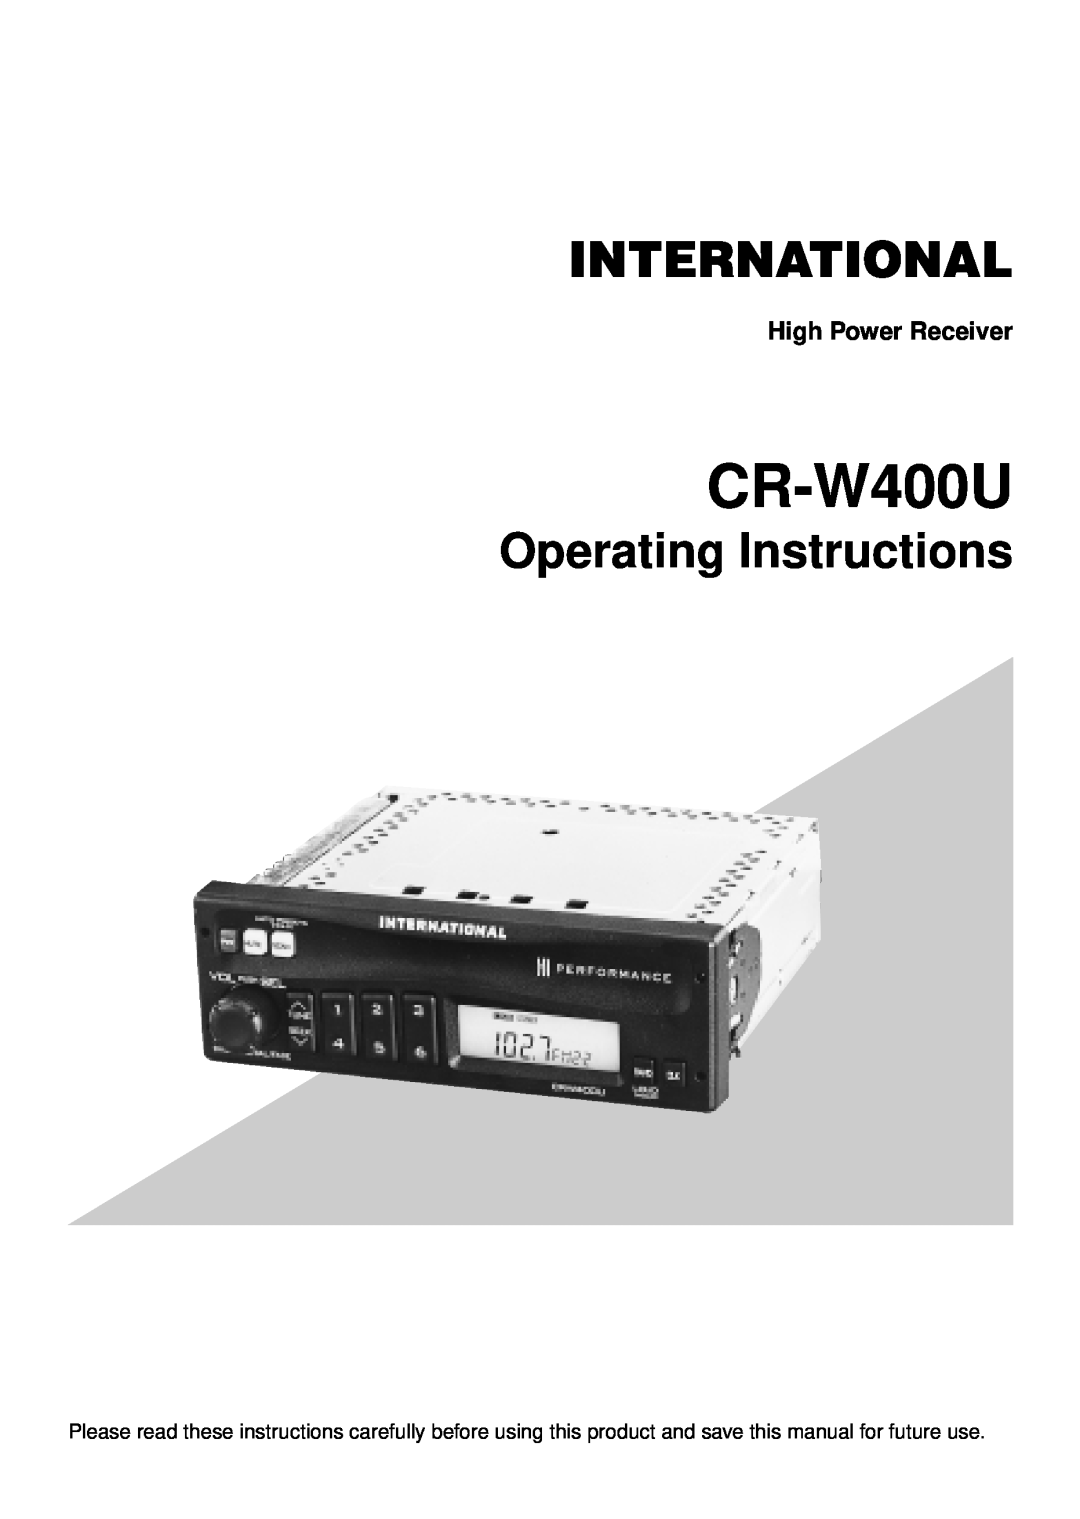 Panasonic CR-W400U operating instructions Operating Instructions, High Power Receiver 